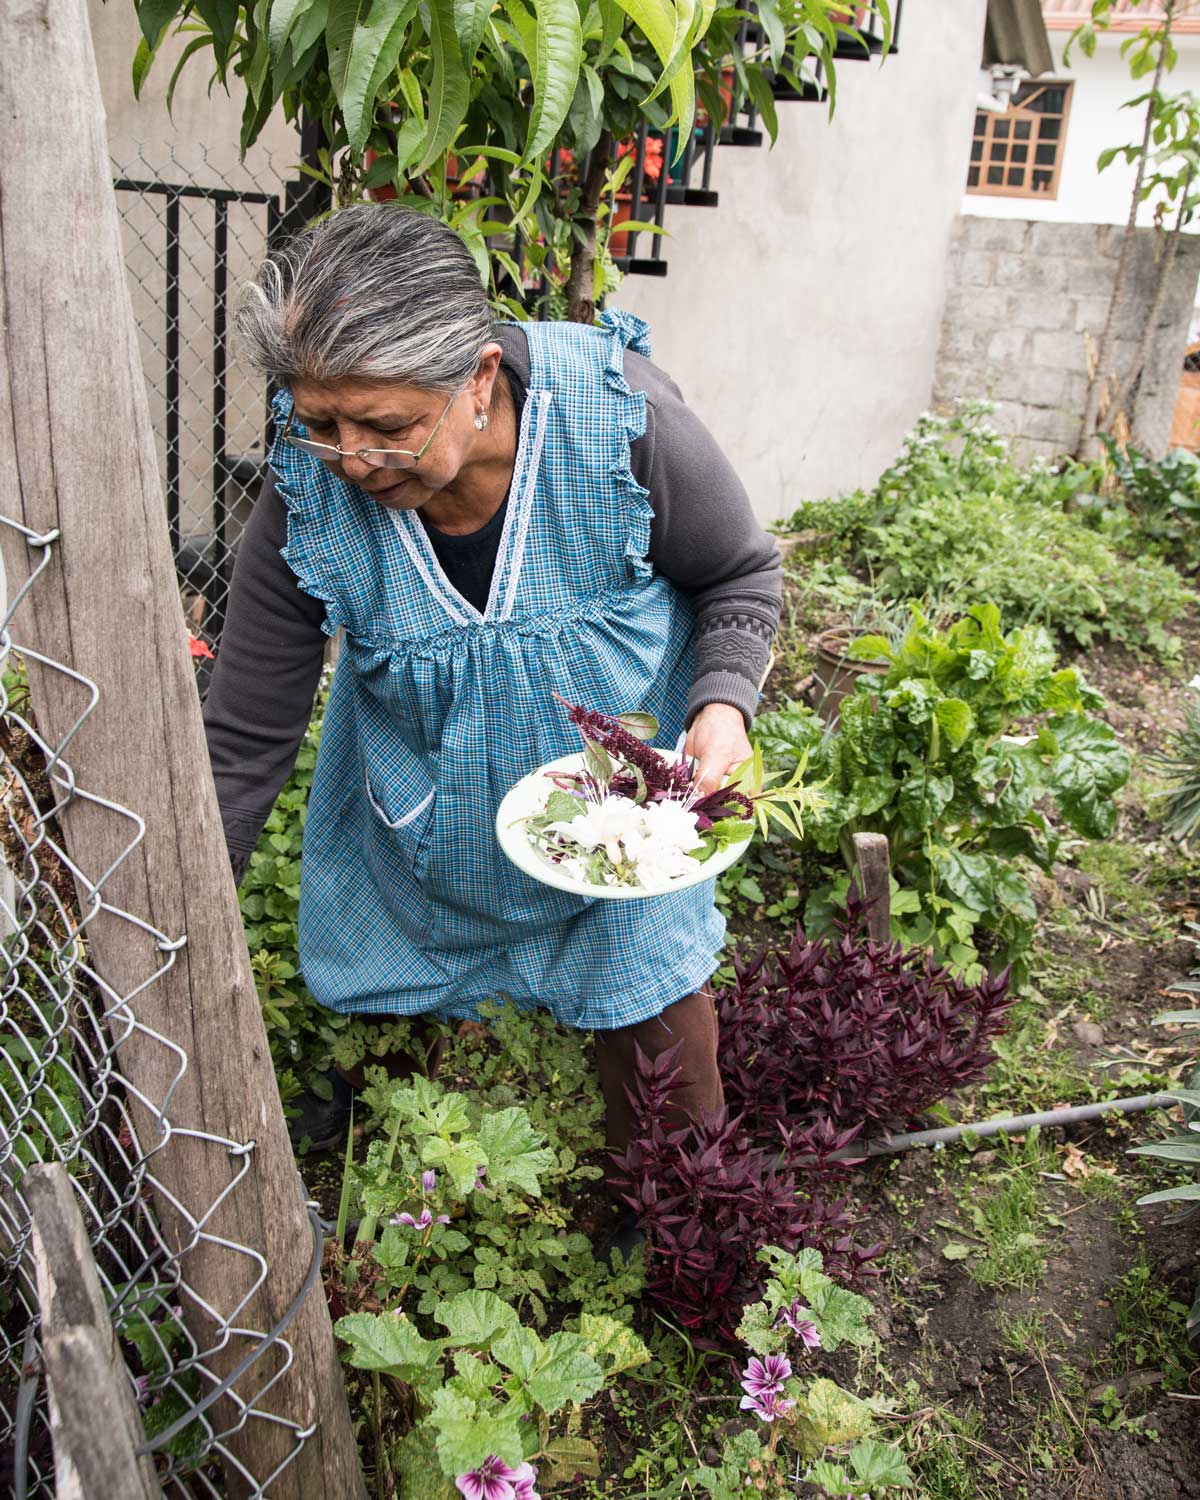 Señora Elmira harvests plants to make horchata, San Bartolome, Ecuador | ©Angela Drake